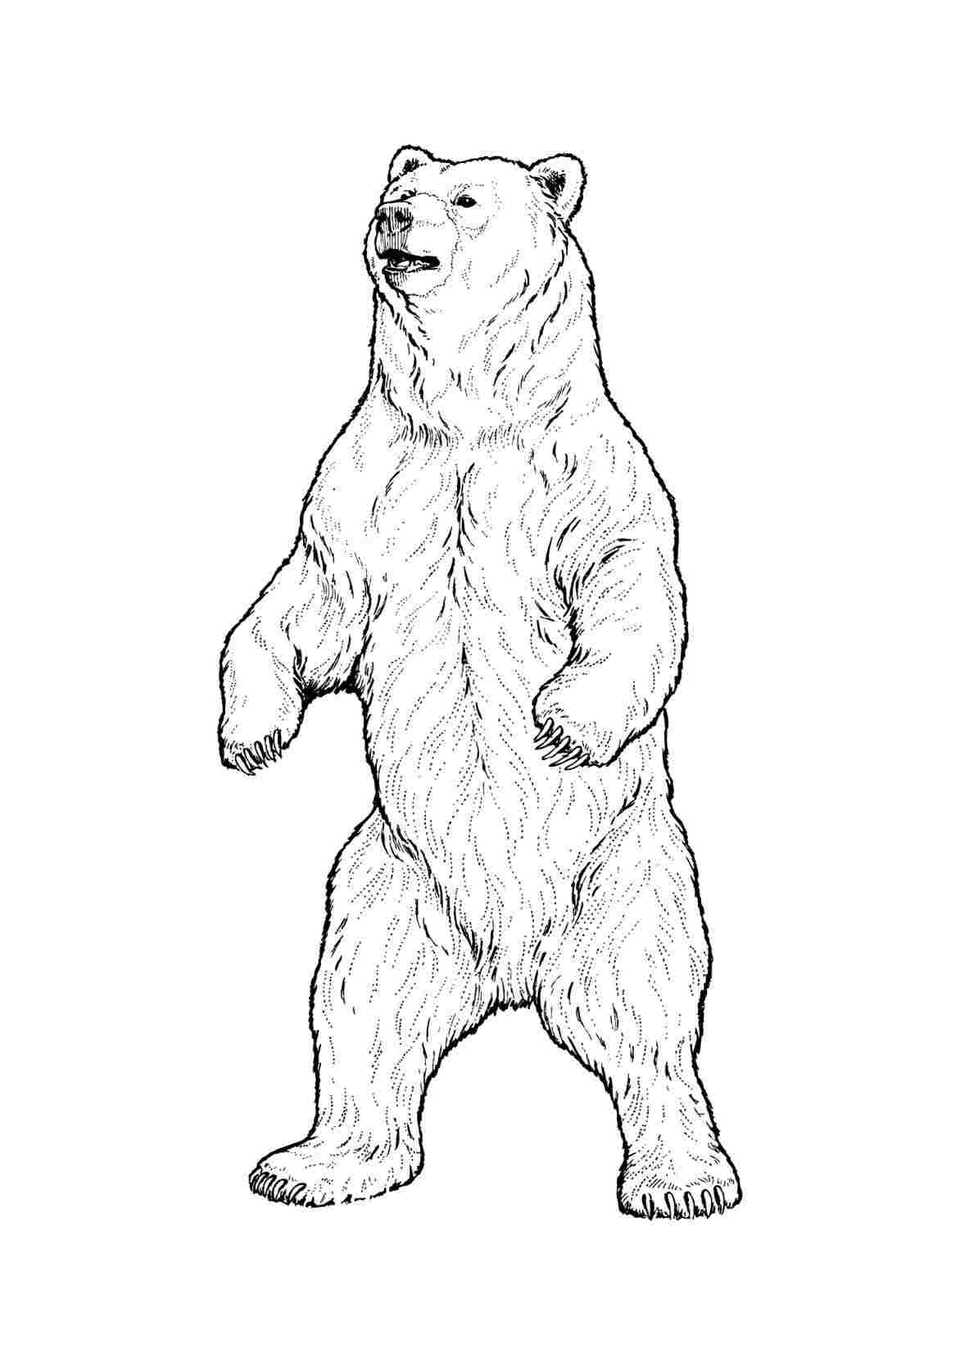 Медведь на задних лапах